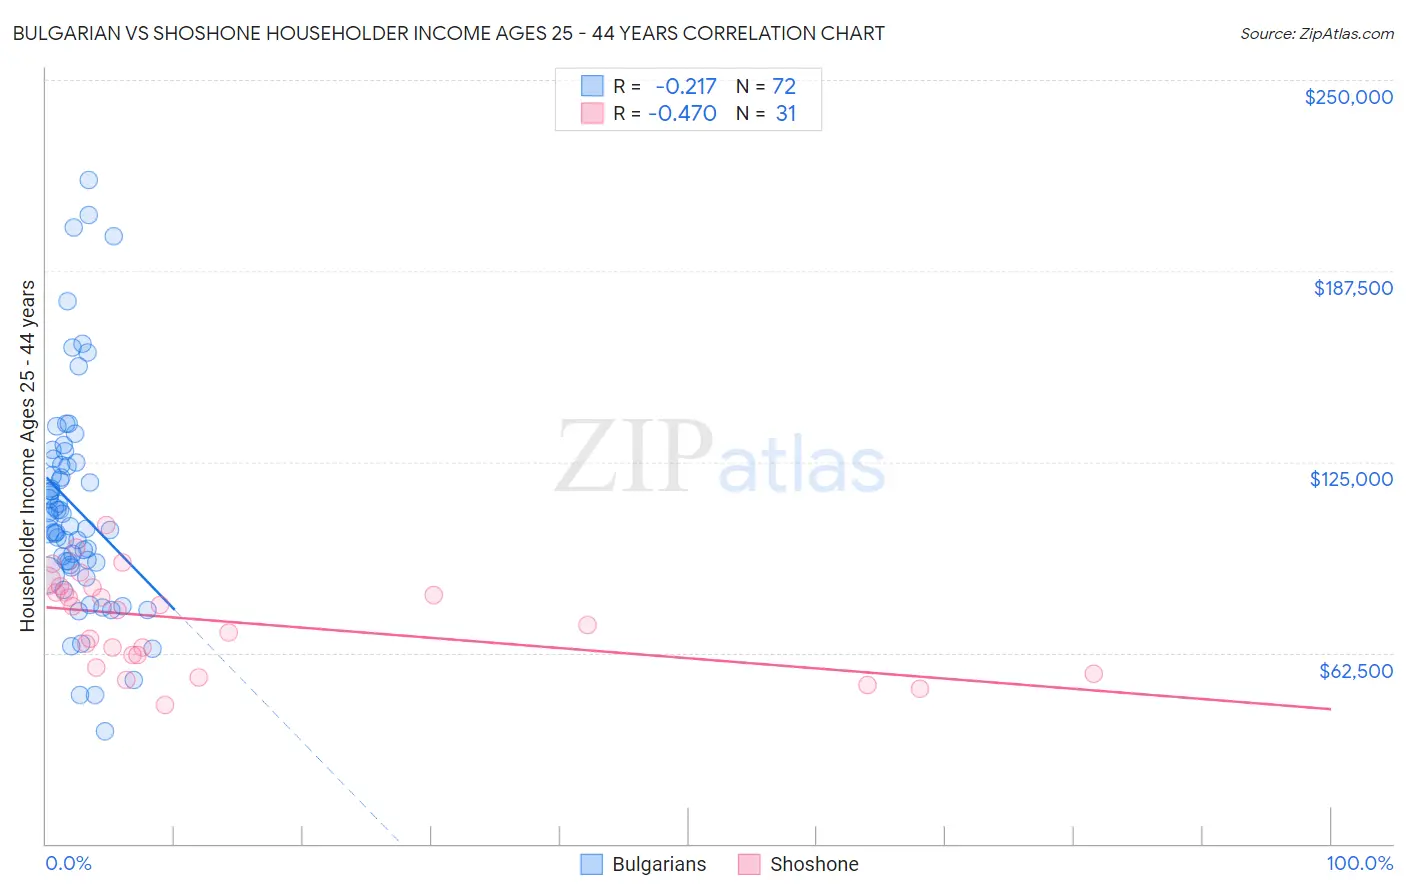 Bulgarian vs Shoshone Householder Income Ages 25 - 44 years